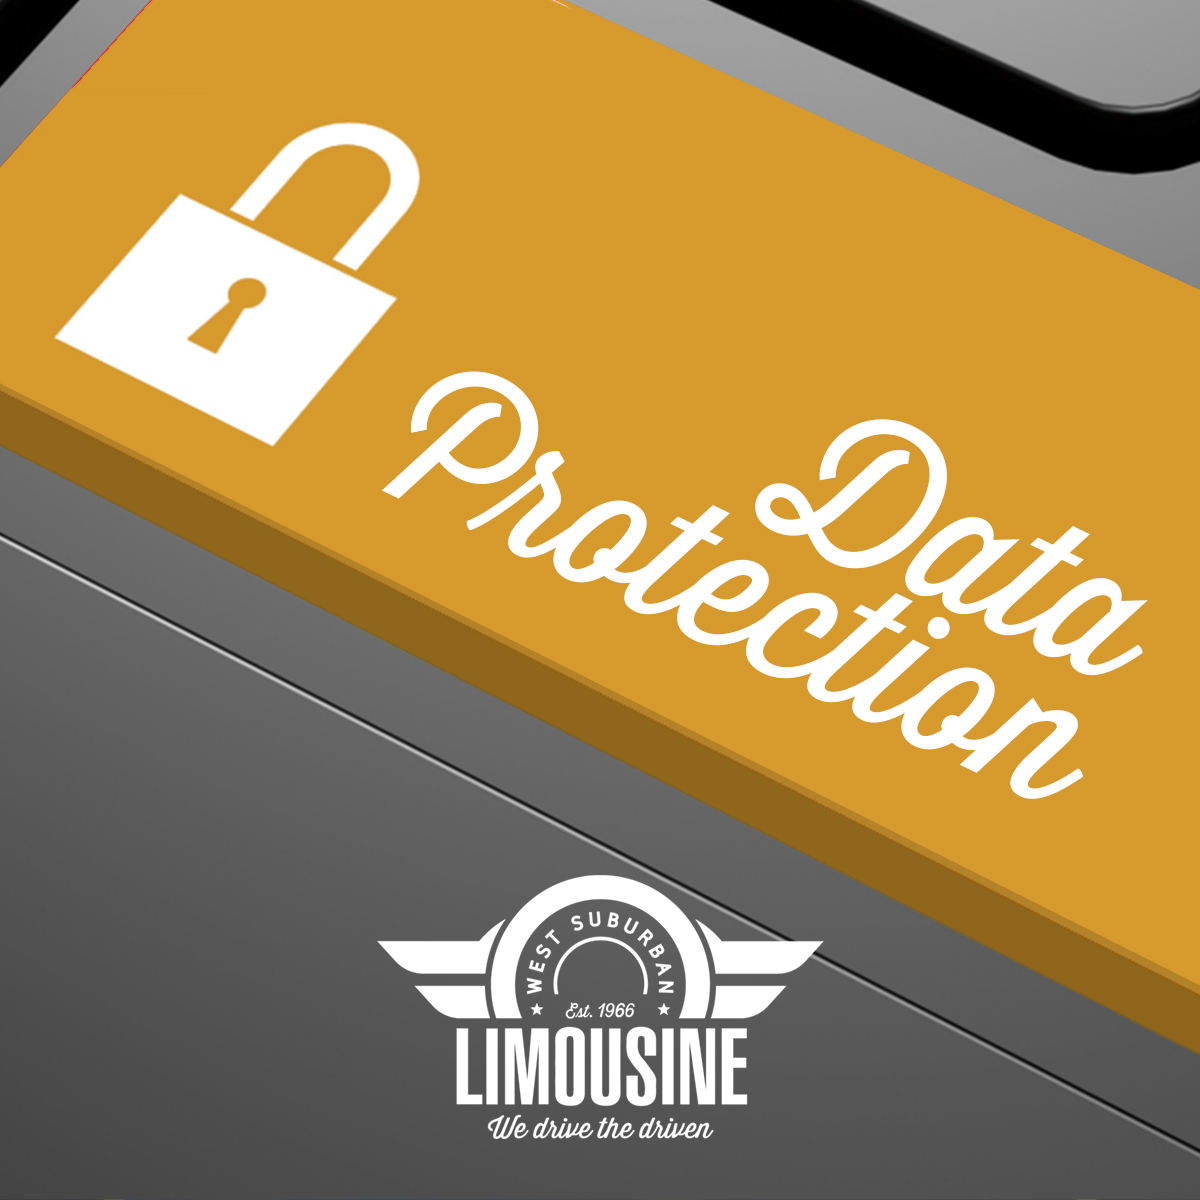 Client Data Protection Services at West Suburban Limousine